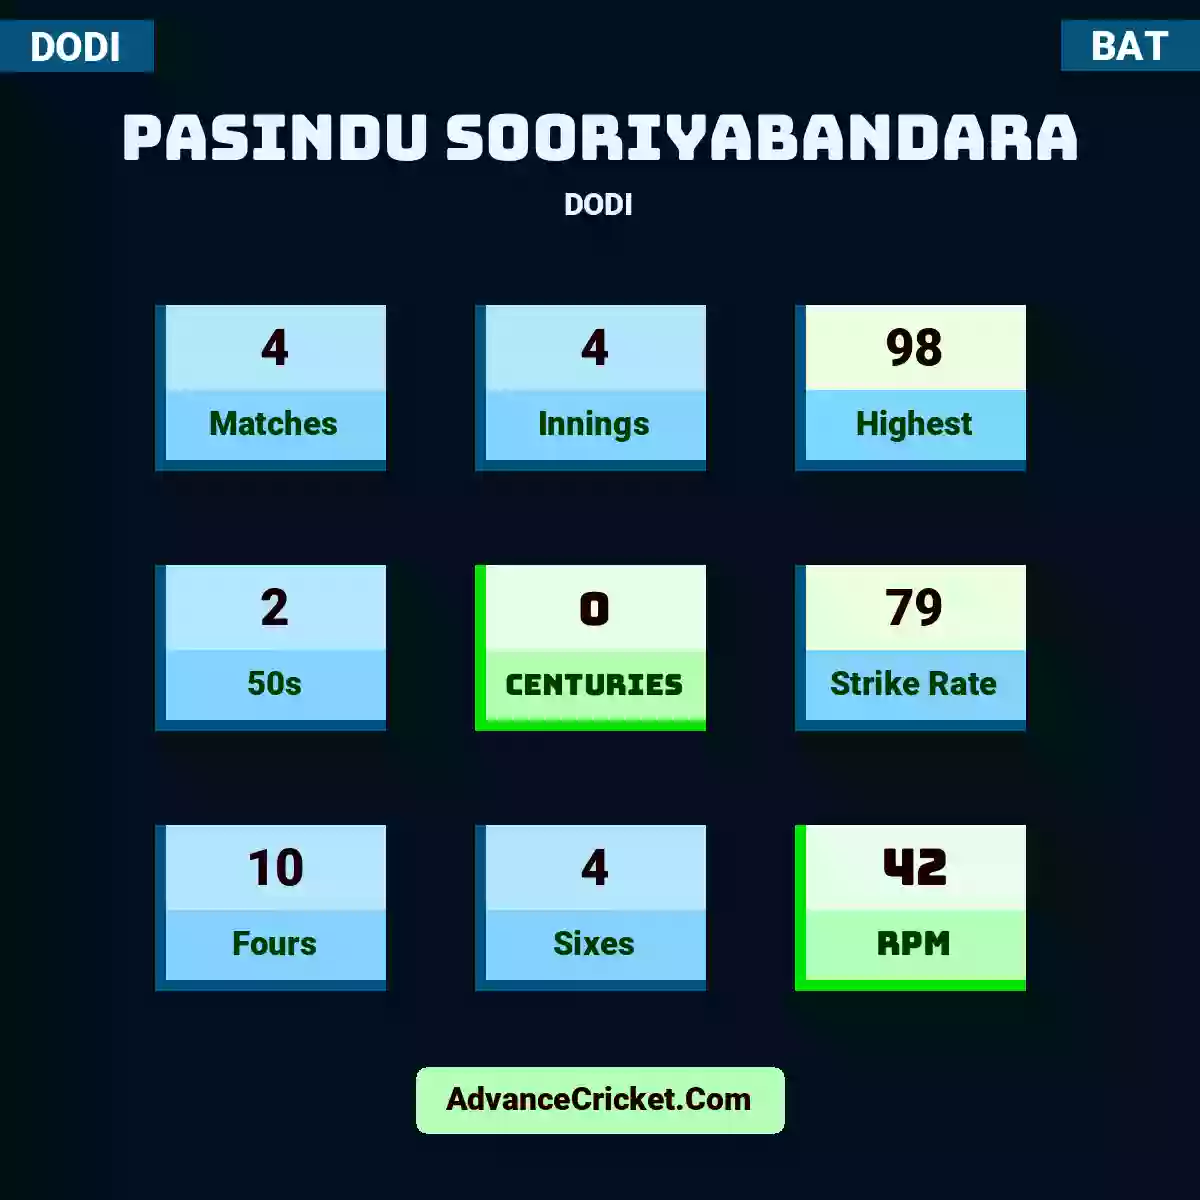 Pasindu Sooriyabandara DODI , Pasindu Sooriyabandara played 4 matches, scored 98 runs as highest, 2 half-centuries, and 0 centuries, with a strike rate of 79. P.Sooriyabandara hit 10 fours and 4 sixes, with an RPM of 42.